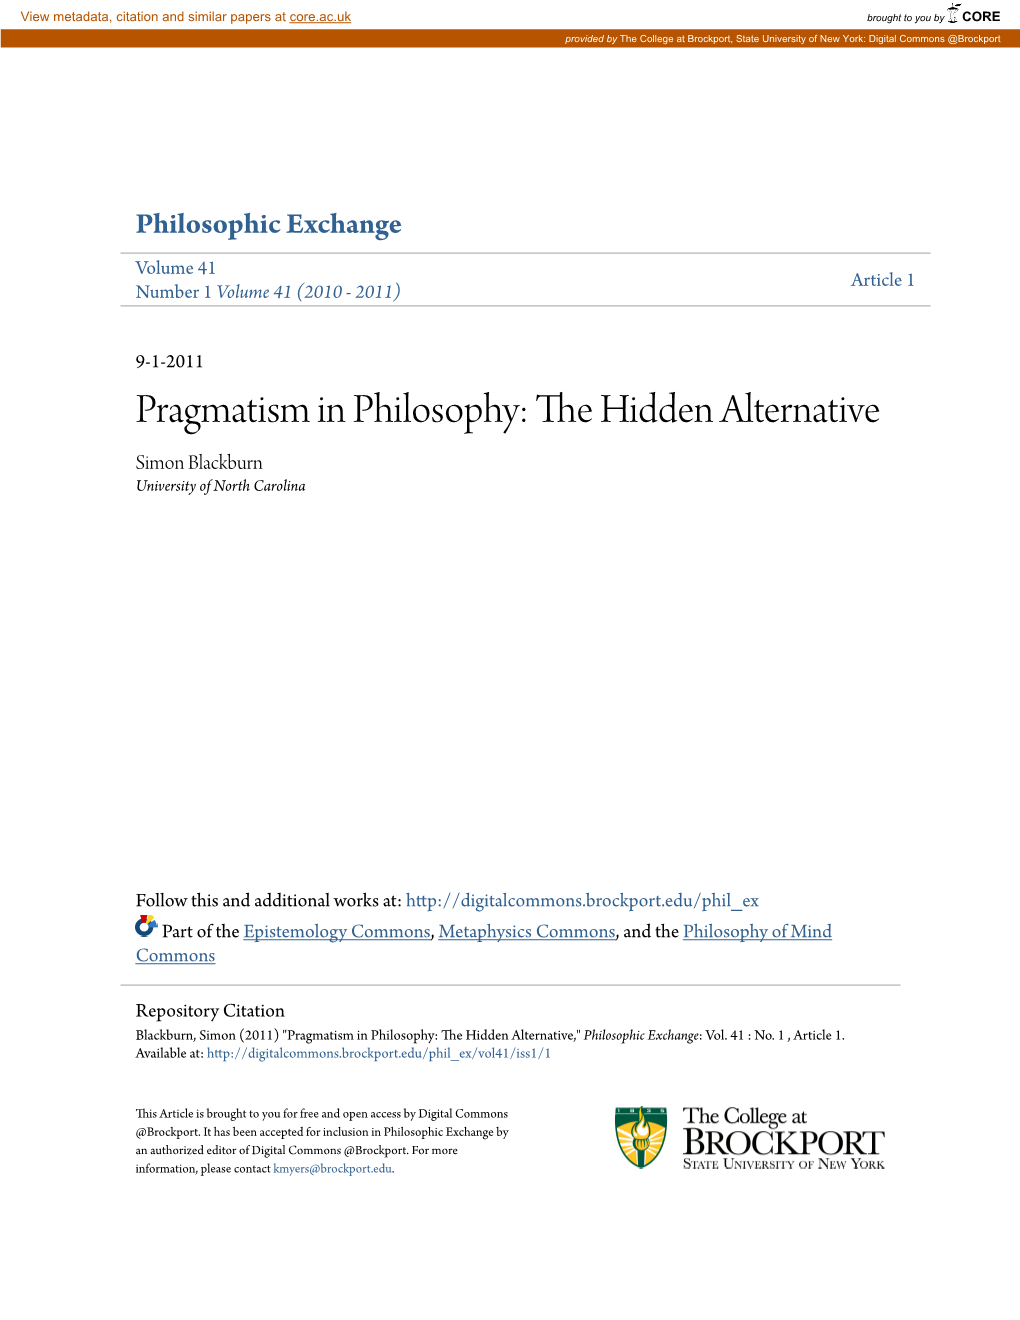 Pragmatism in Philosophy: the Iddeh N Alternative Simon Blackburn University of North Carolina